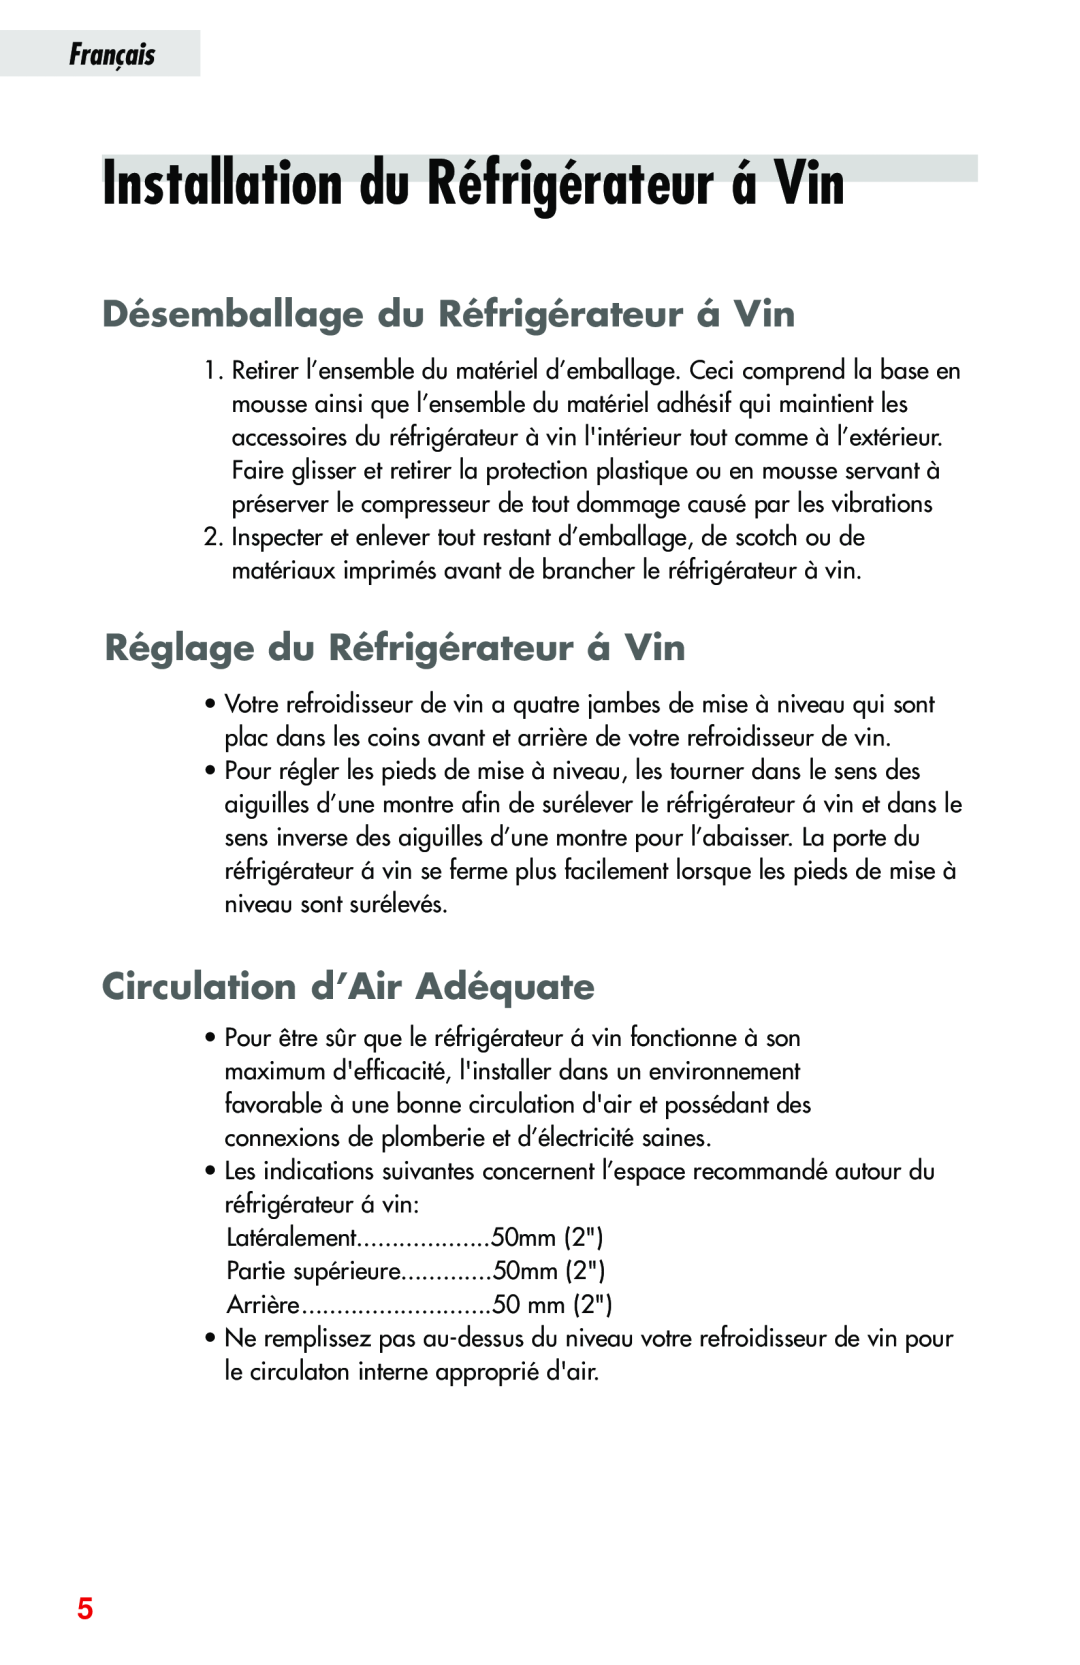 Haier JC-82GB Installation du Réfrigérateur á Vin, Désemballage du Réfrigérateur á Vin, Réglage du Réfrigérateur á Vin 